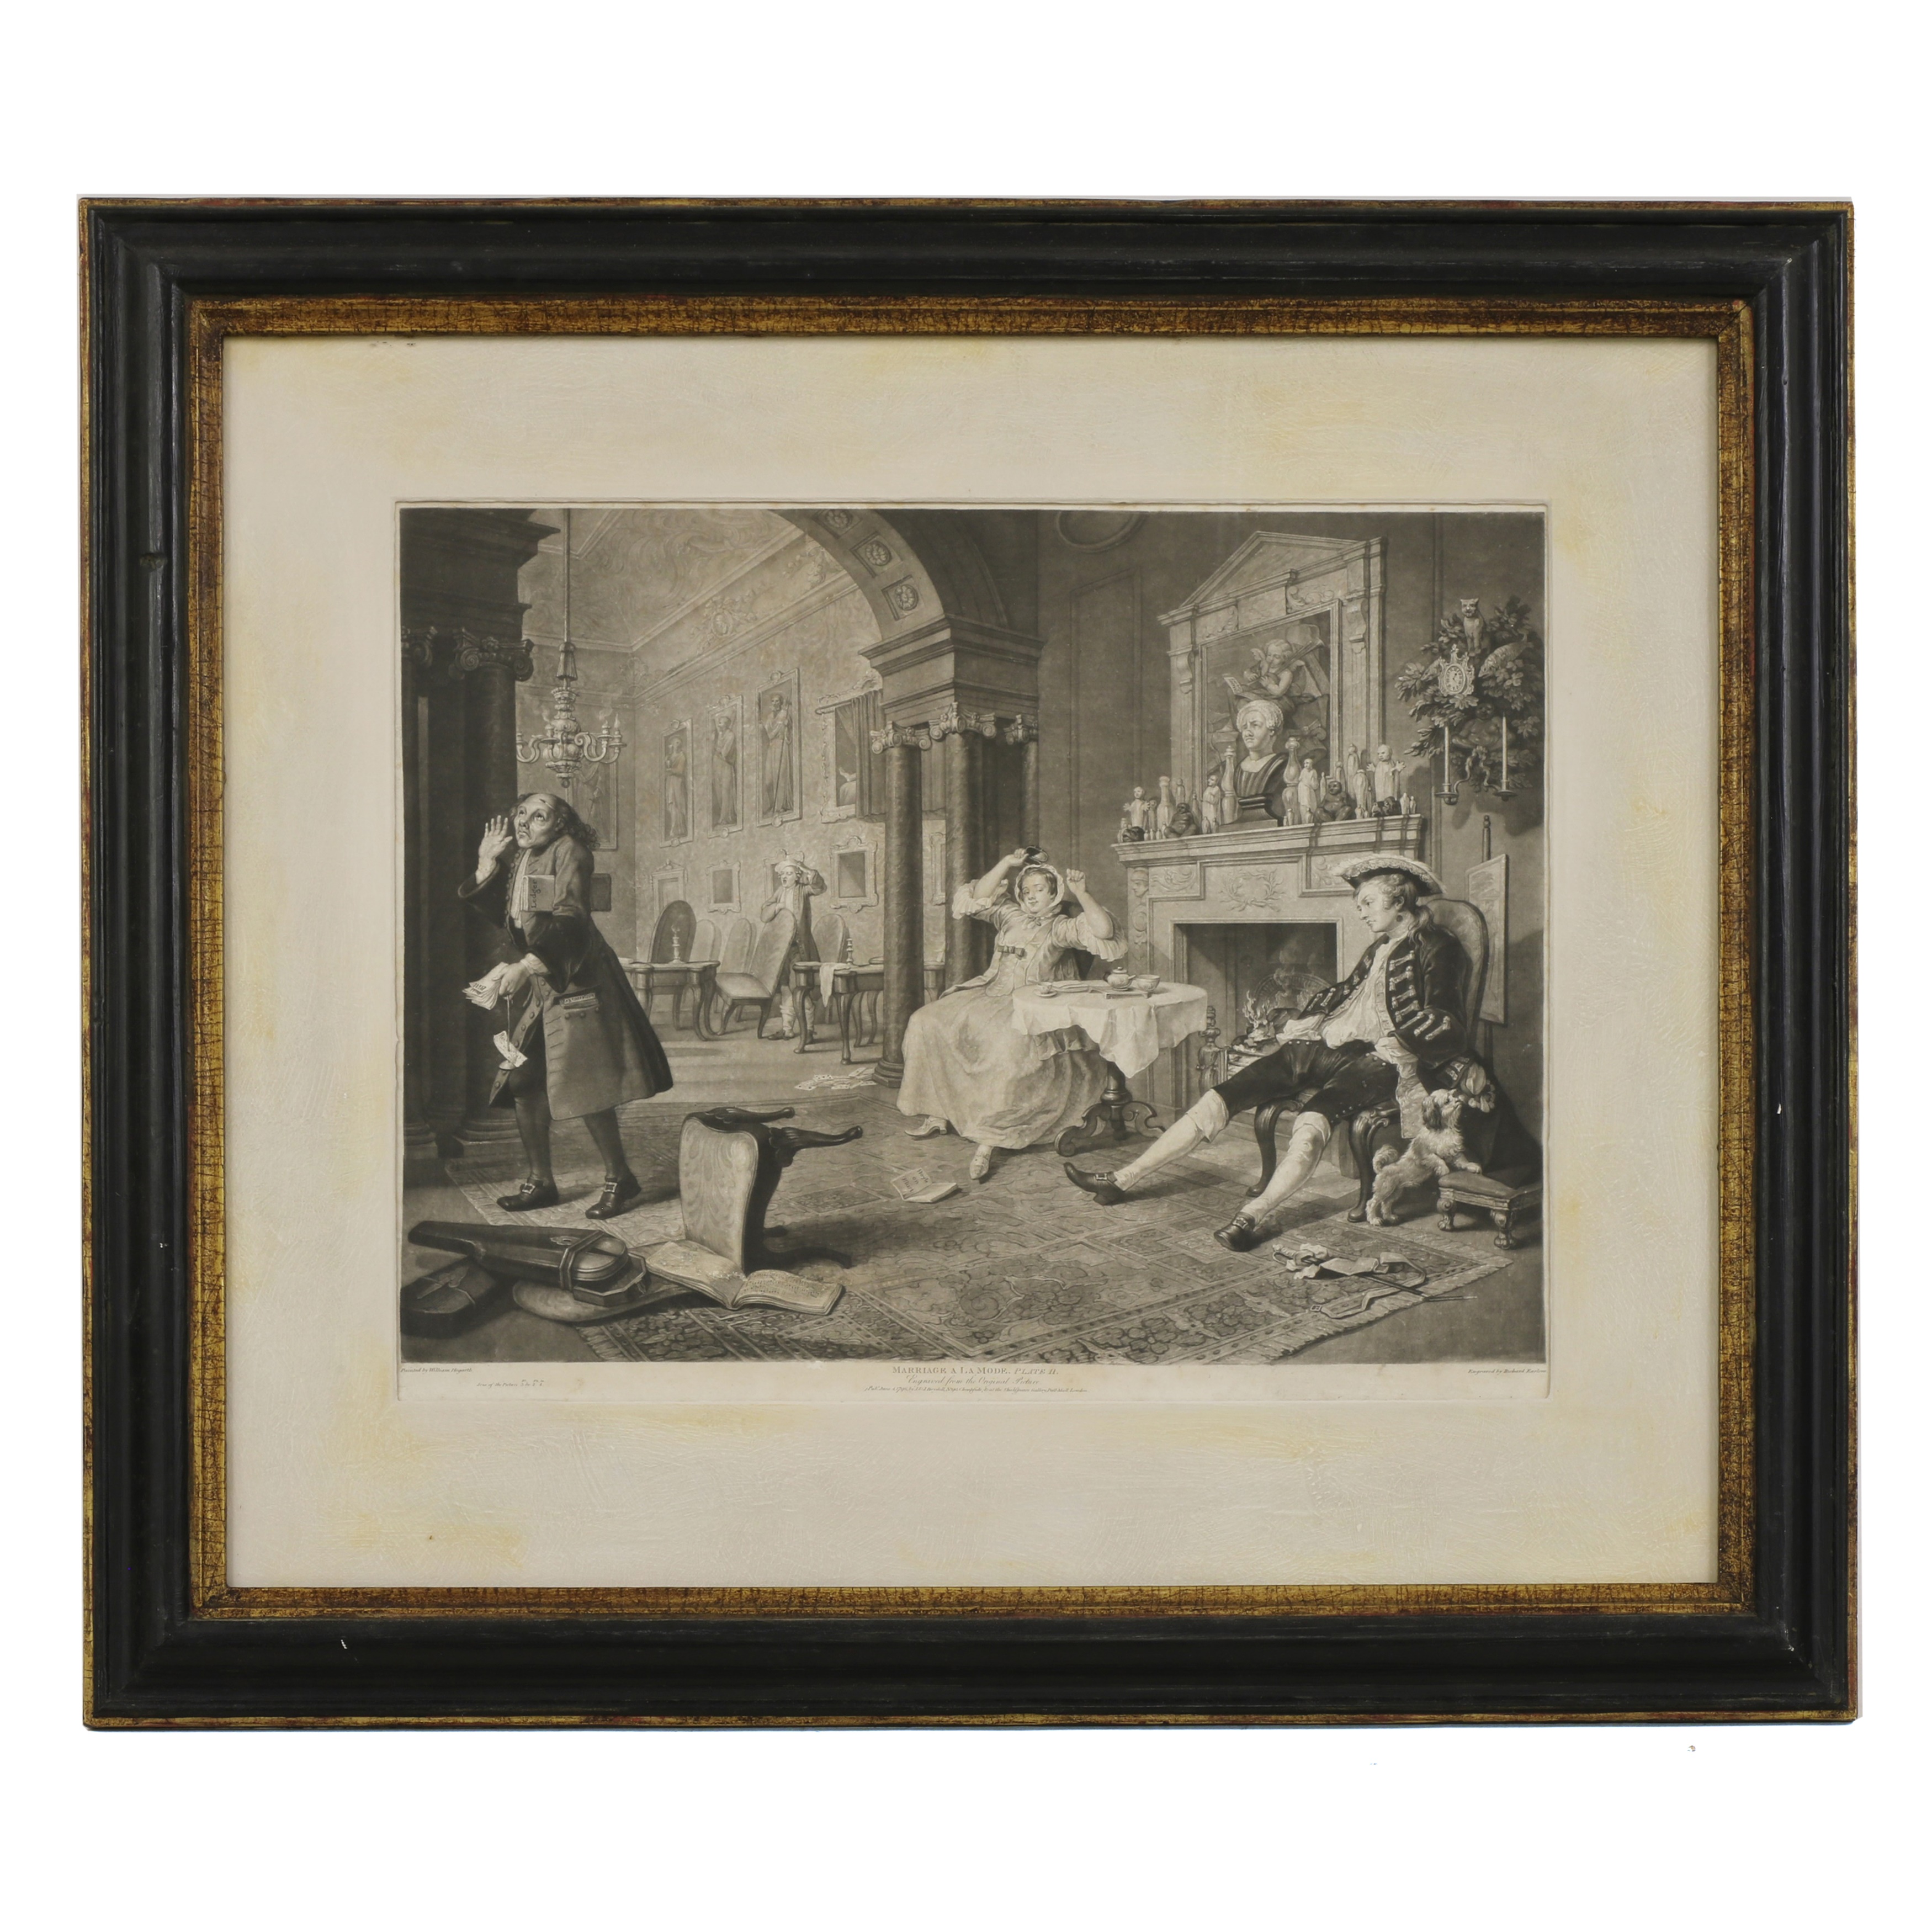 Richard Earlom (1743-1822) after William Hogarth Marriage a la Mode, six mezzotints